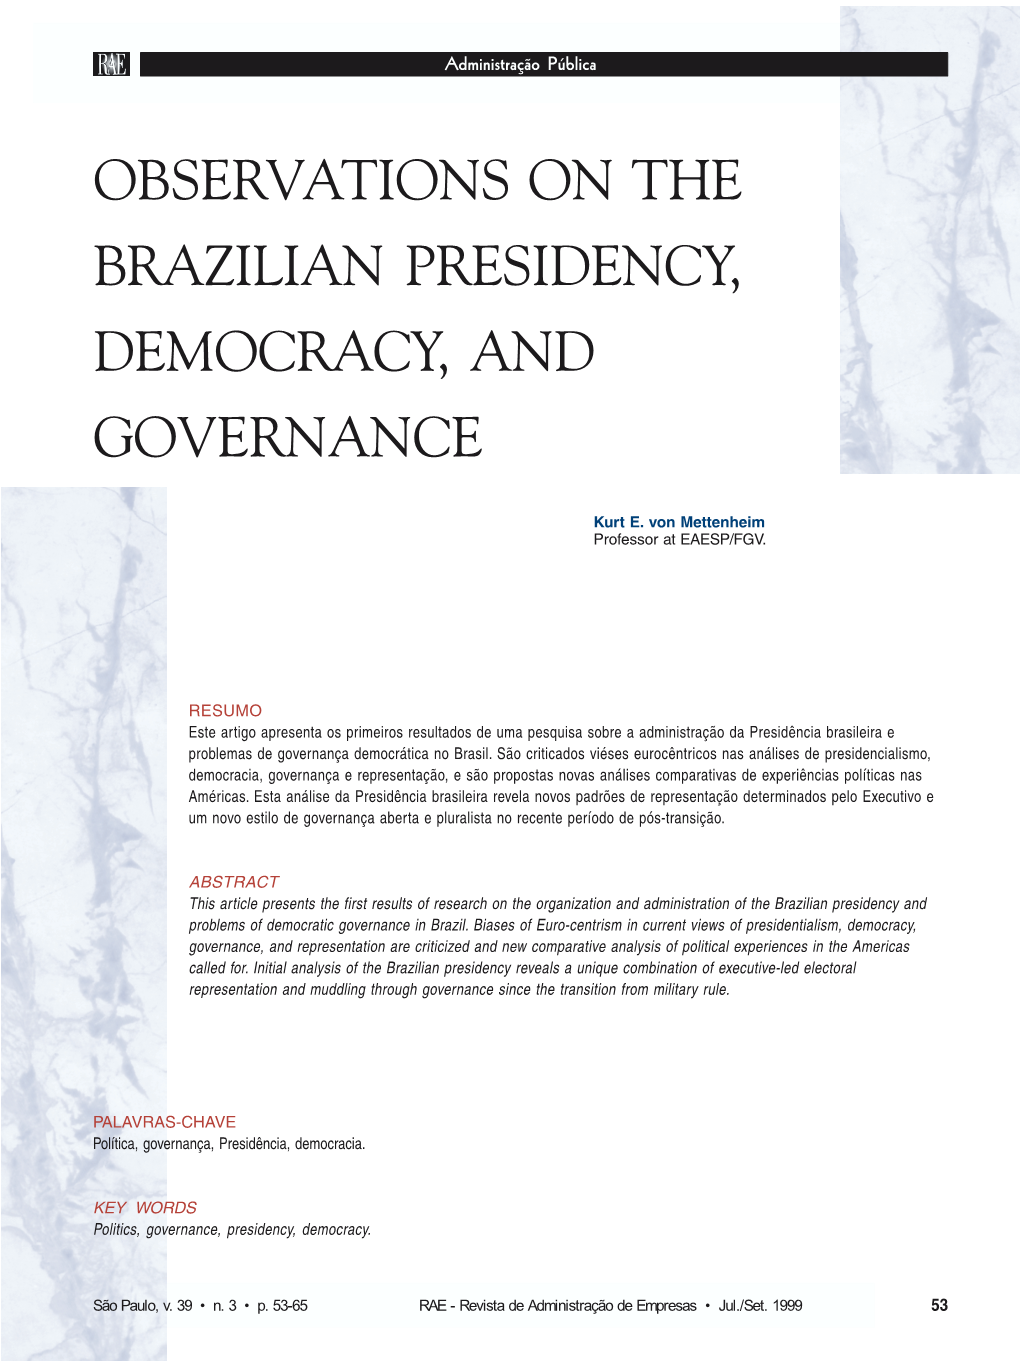 Observations on the Brazilian Presidency, Democracy, and Governance